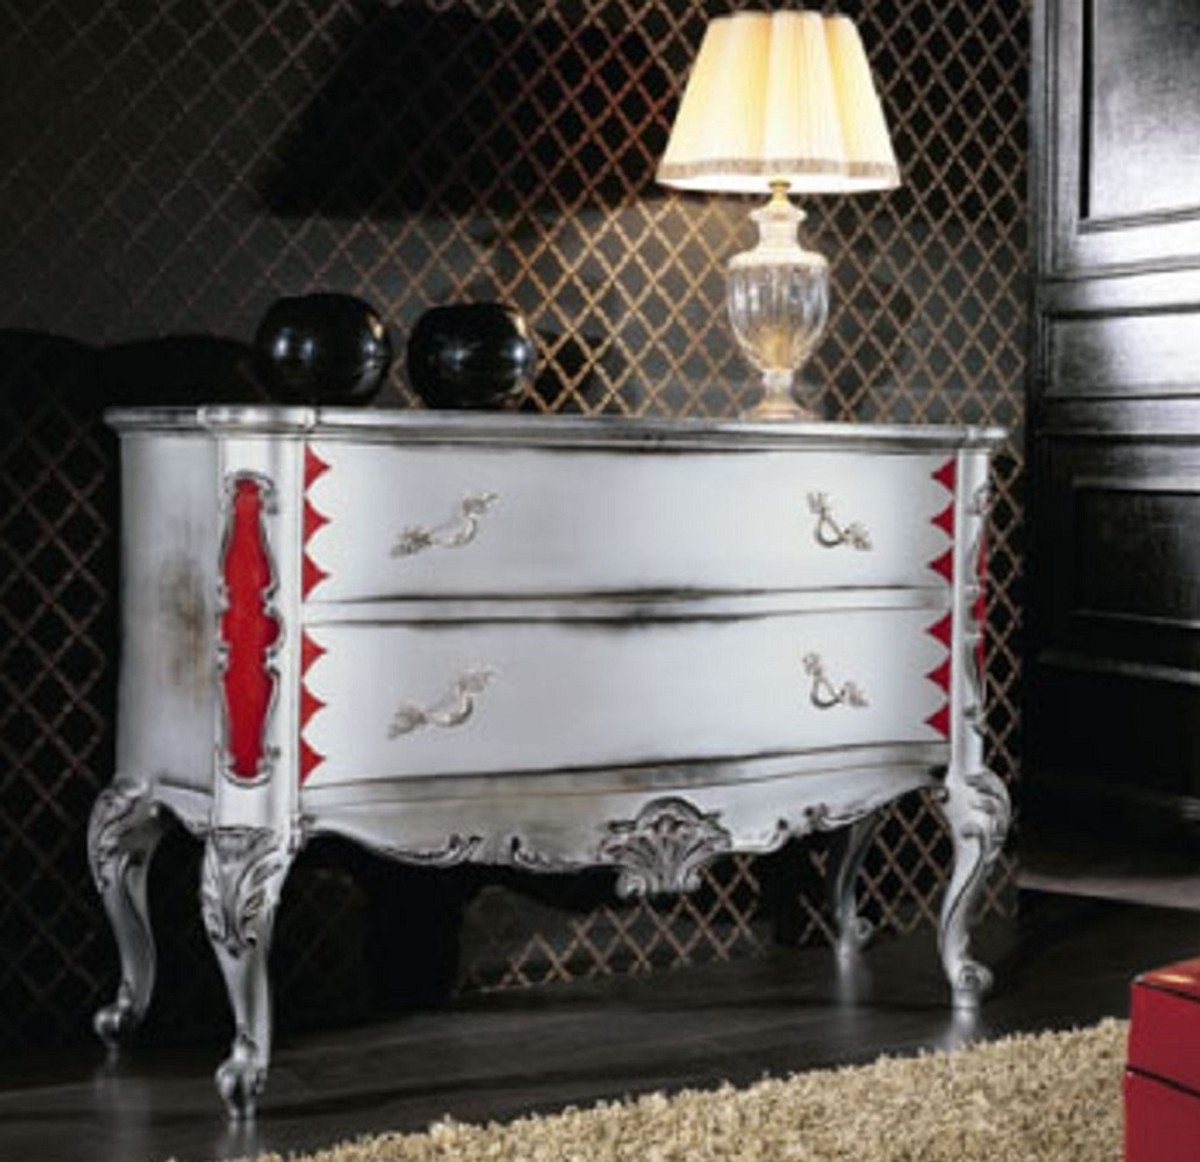 Casa Padrino Kommode »Casa Padrino Luxus Barock Kommode Antik Weiß / Silber  / Rot - Handgefertigte Massivholz Kommode mit 2 Schubladen - Barockstil  Schlafzimmer Möbel - Barock Möbel - Luxus Qualität - Made in Italy«